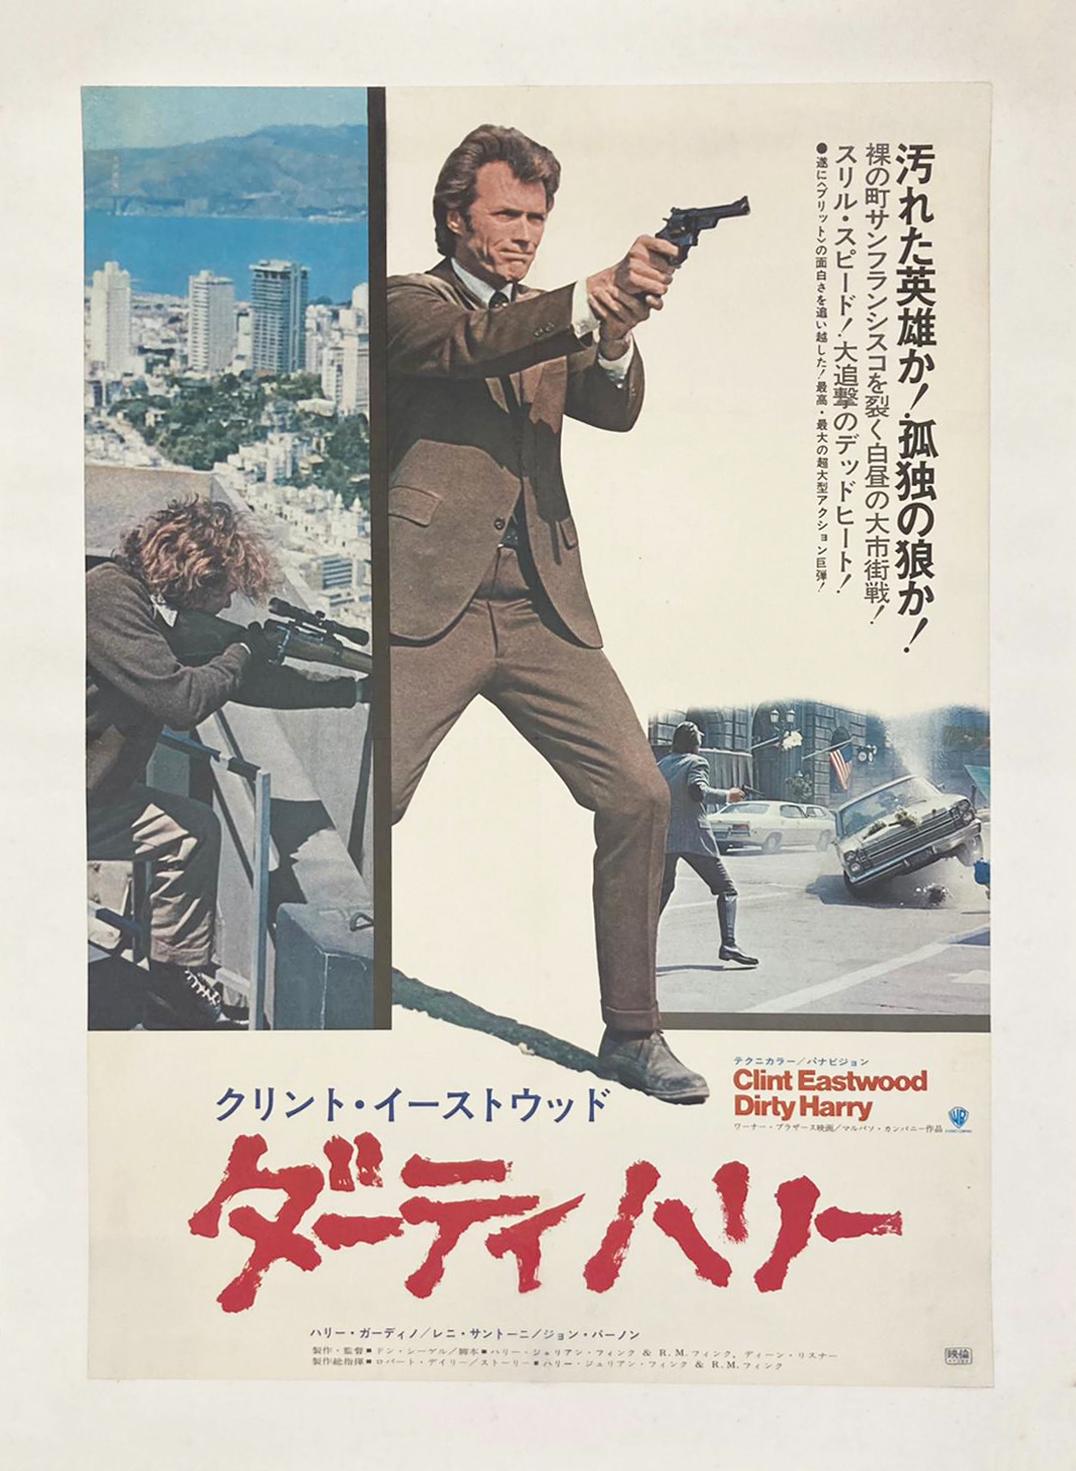 Unknown Figurative Print – Clint Eastwood Dirty Harry Original Vintage B2 Japanisches Original-Vintage-Poster 1971